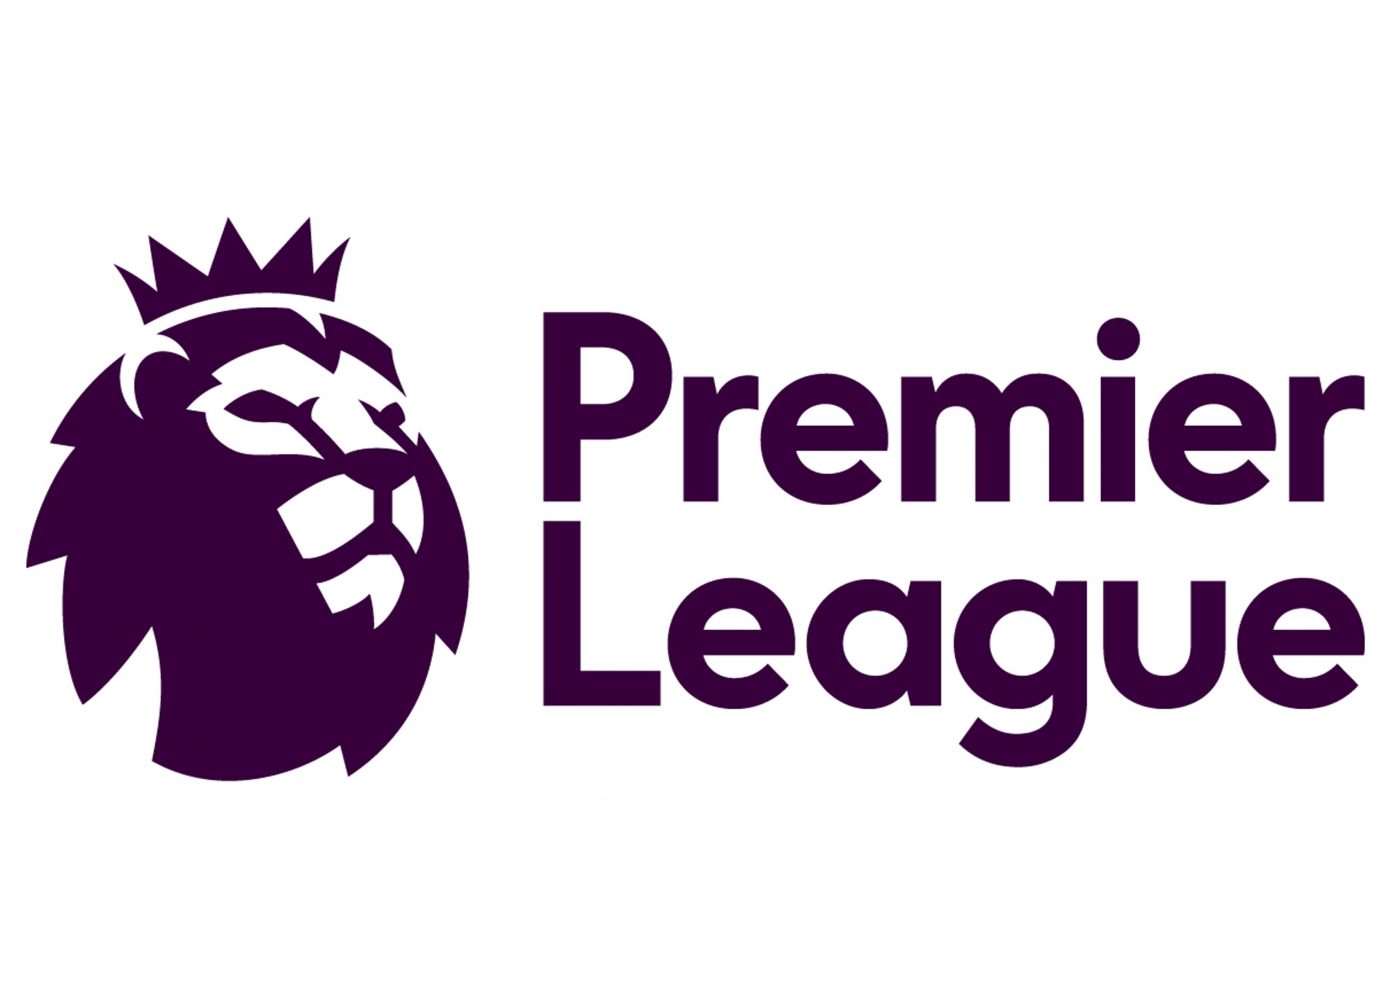 Premier League 2020-21 fixtures announced - Football is back!